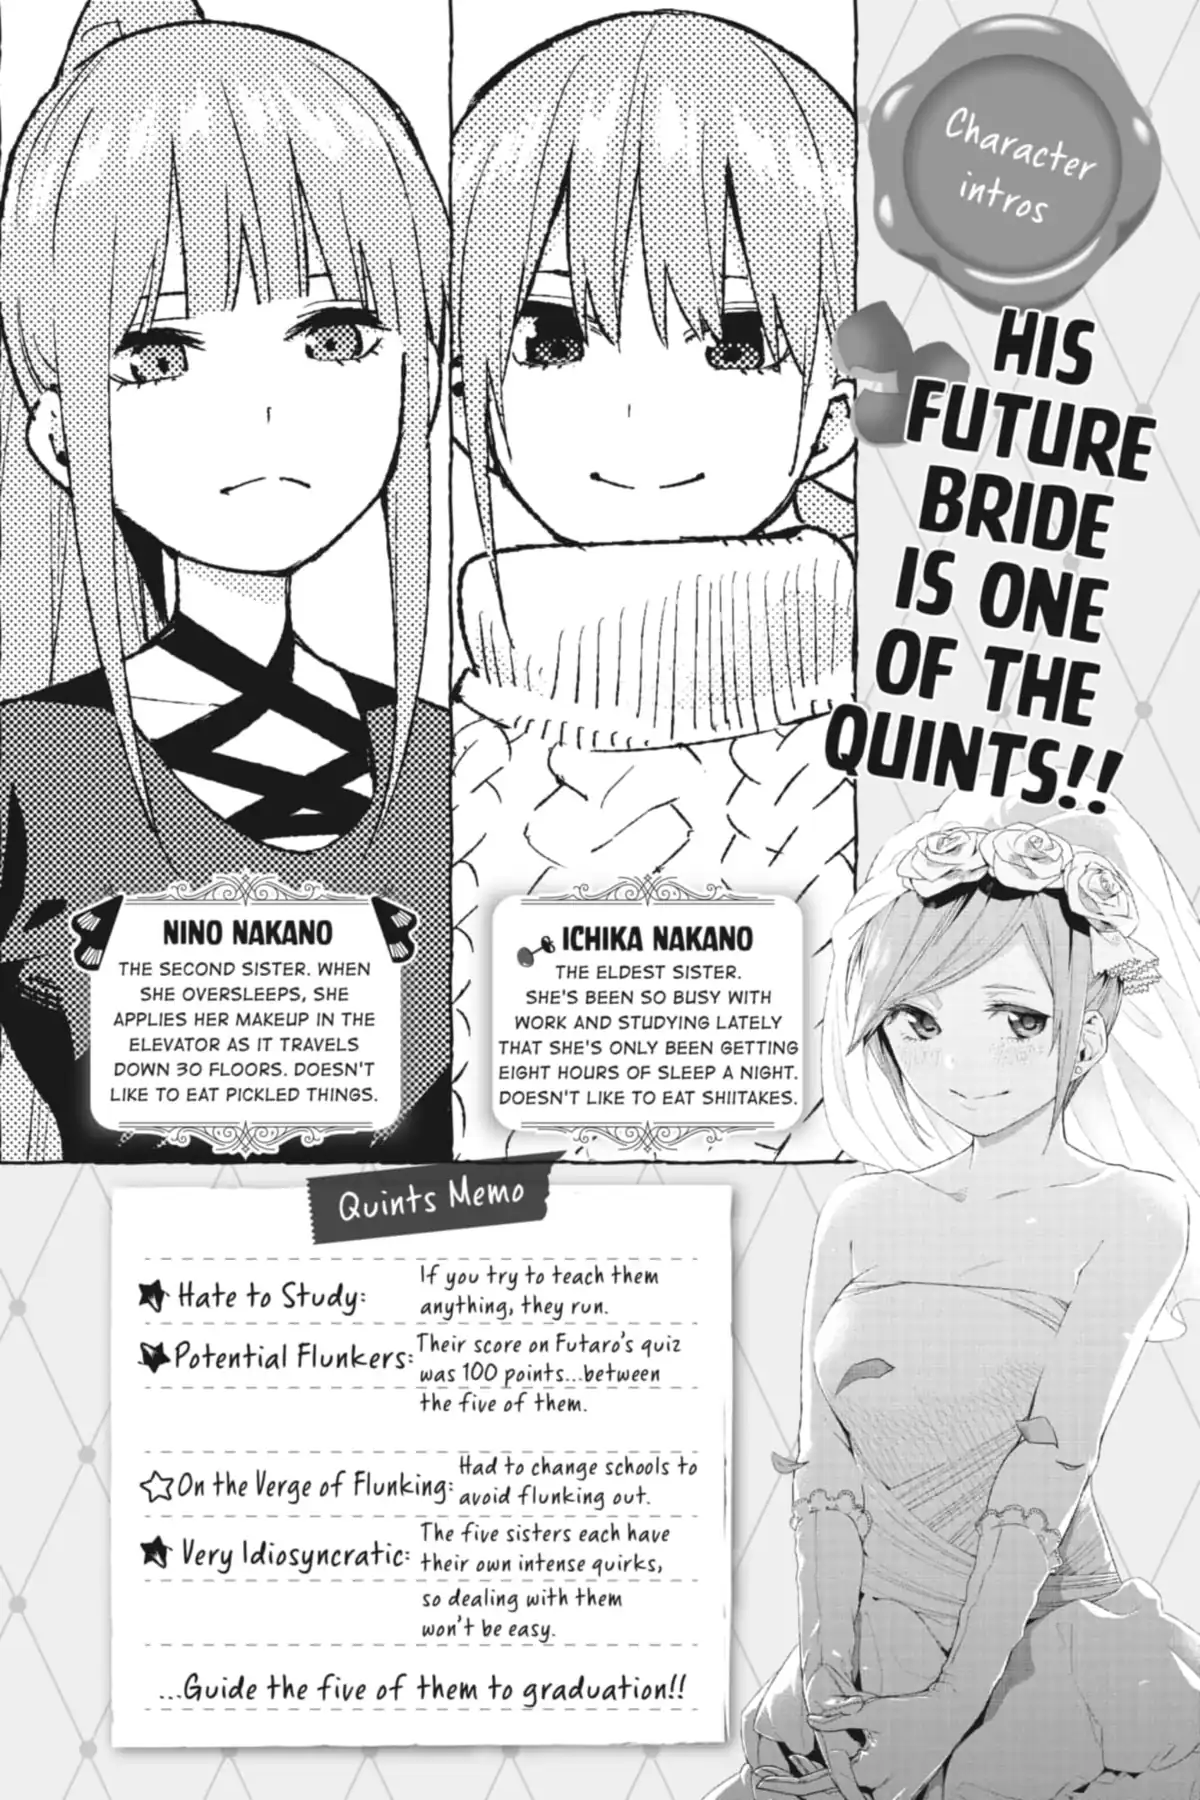 Read 5Toubun No Hanayome - Current And Previous Nino Comparison (Doujinshi)  Manga on Mangakakalot